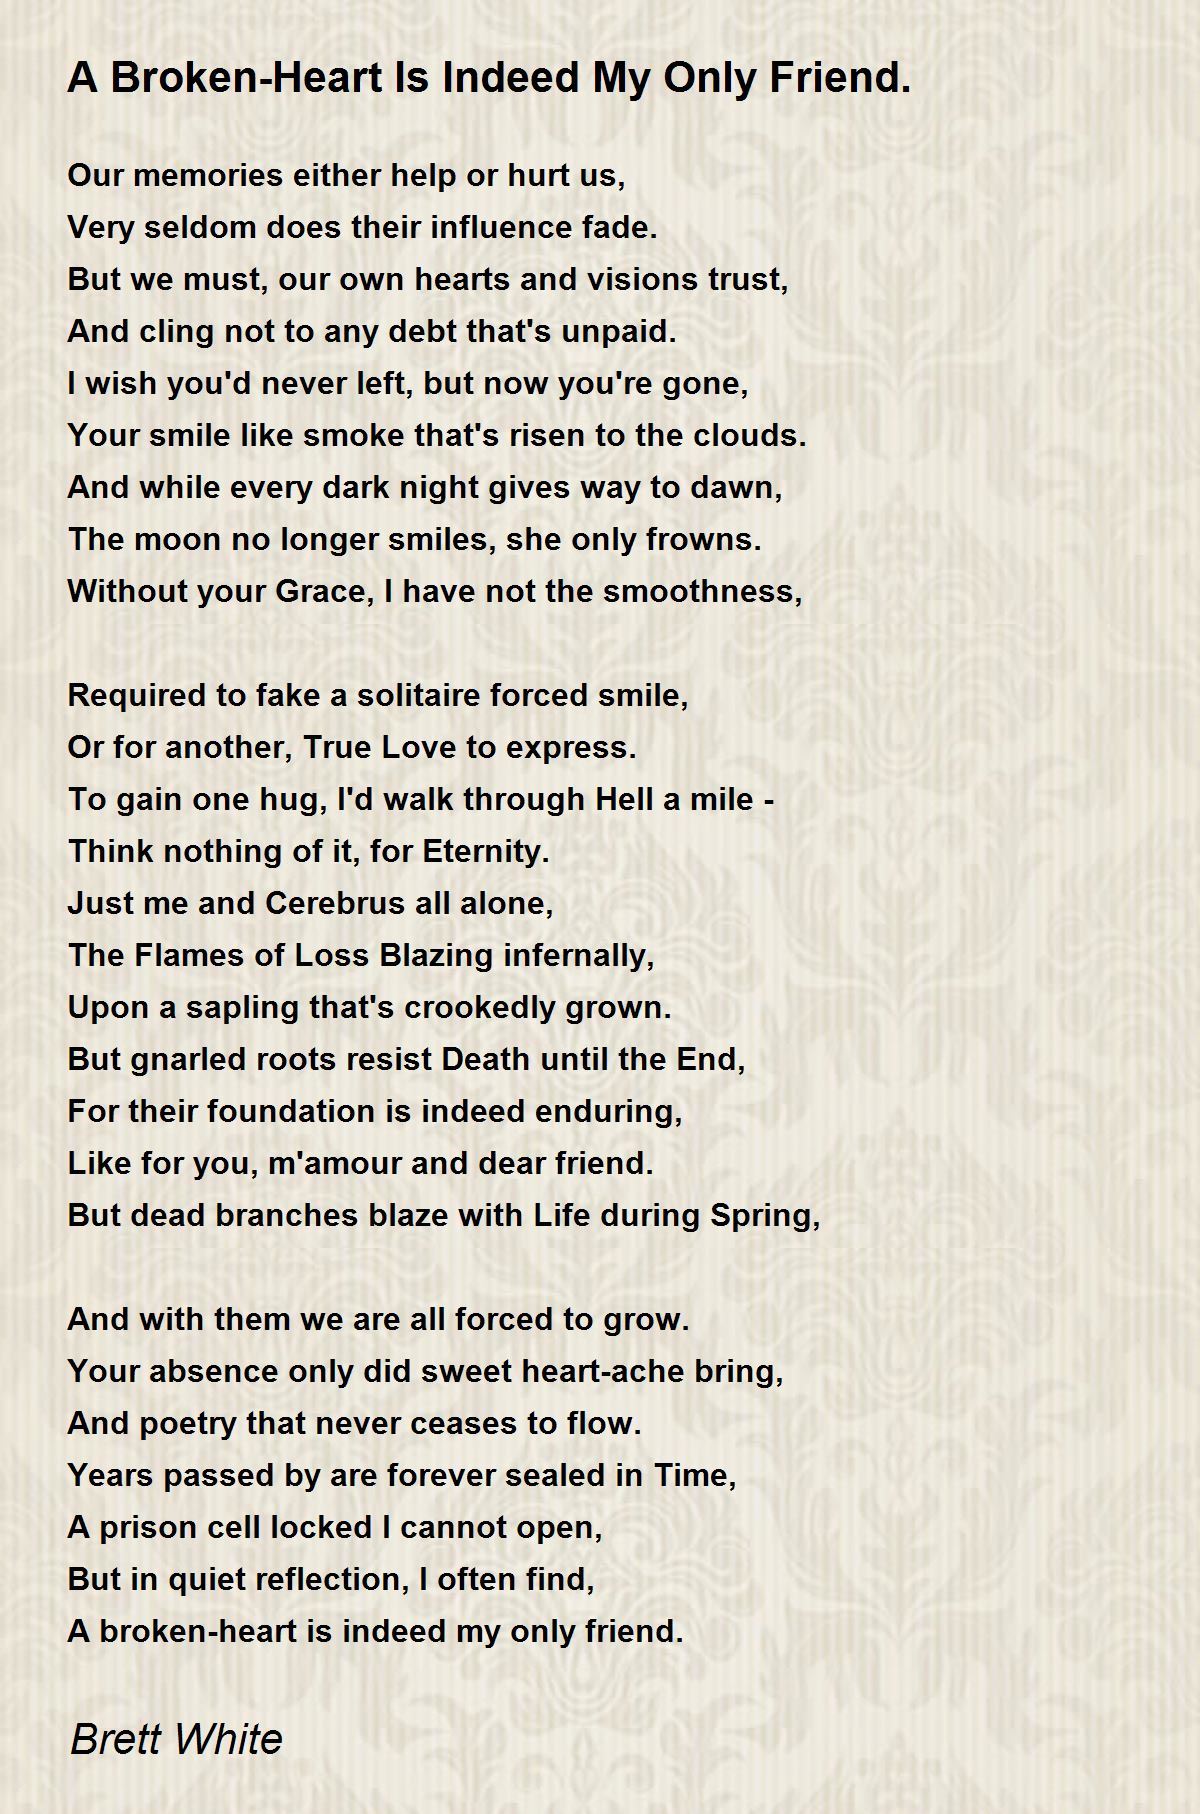 A Broken-Heart Is Indeed My Only Friend. Poem by Brett White - Poem Hunter